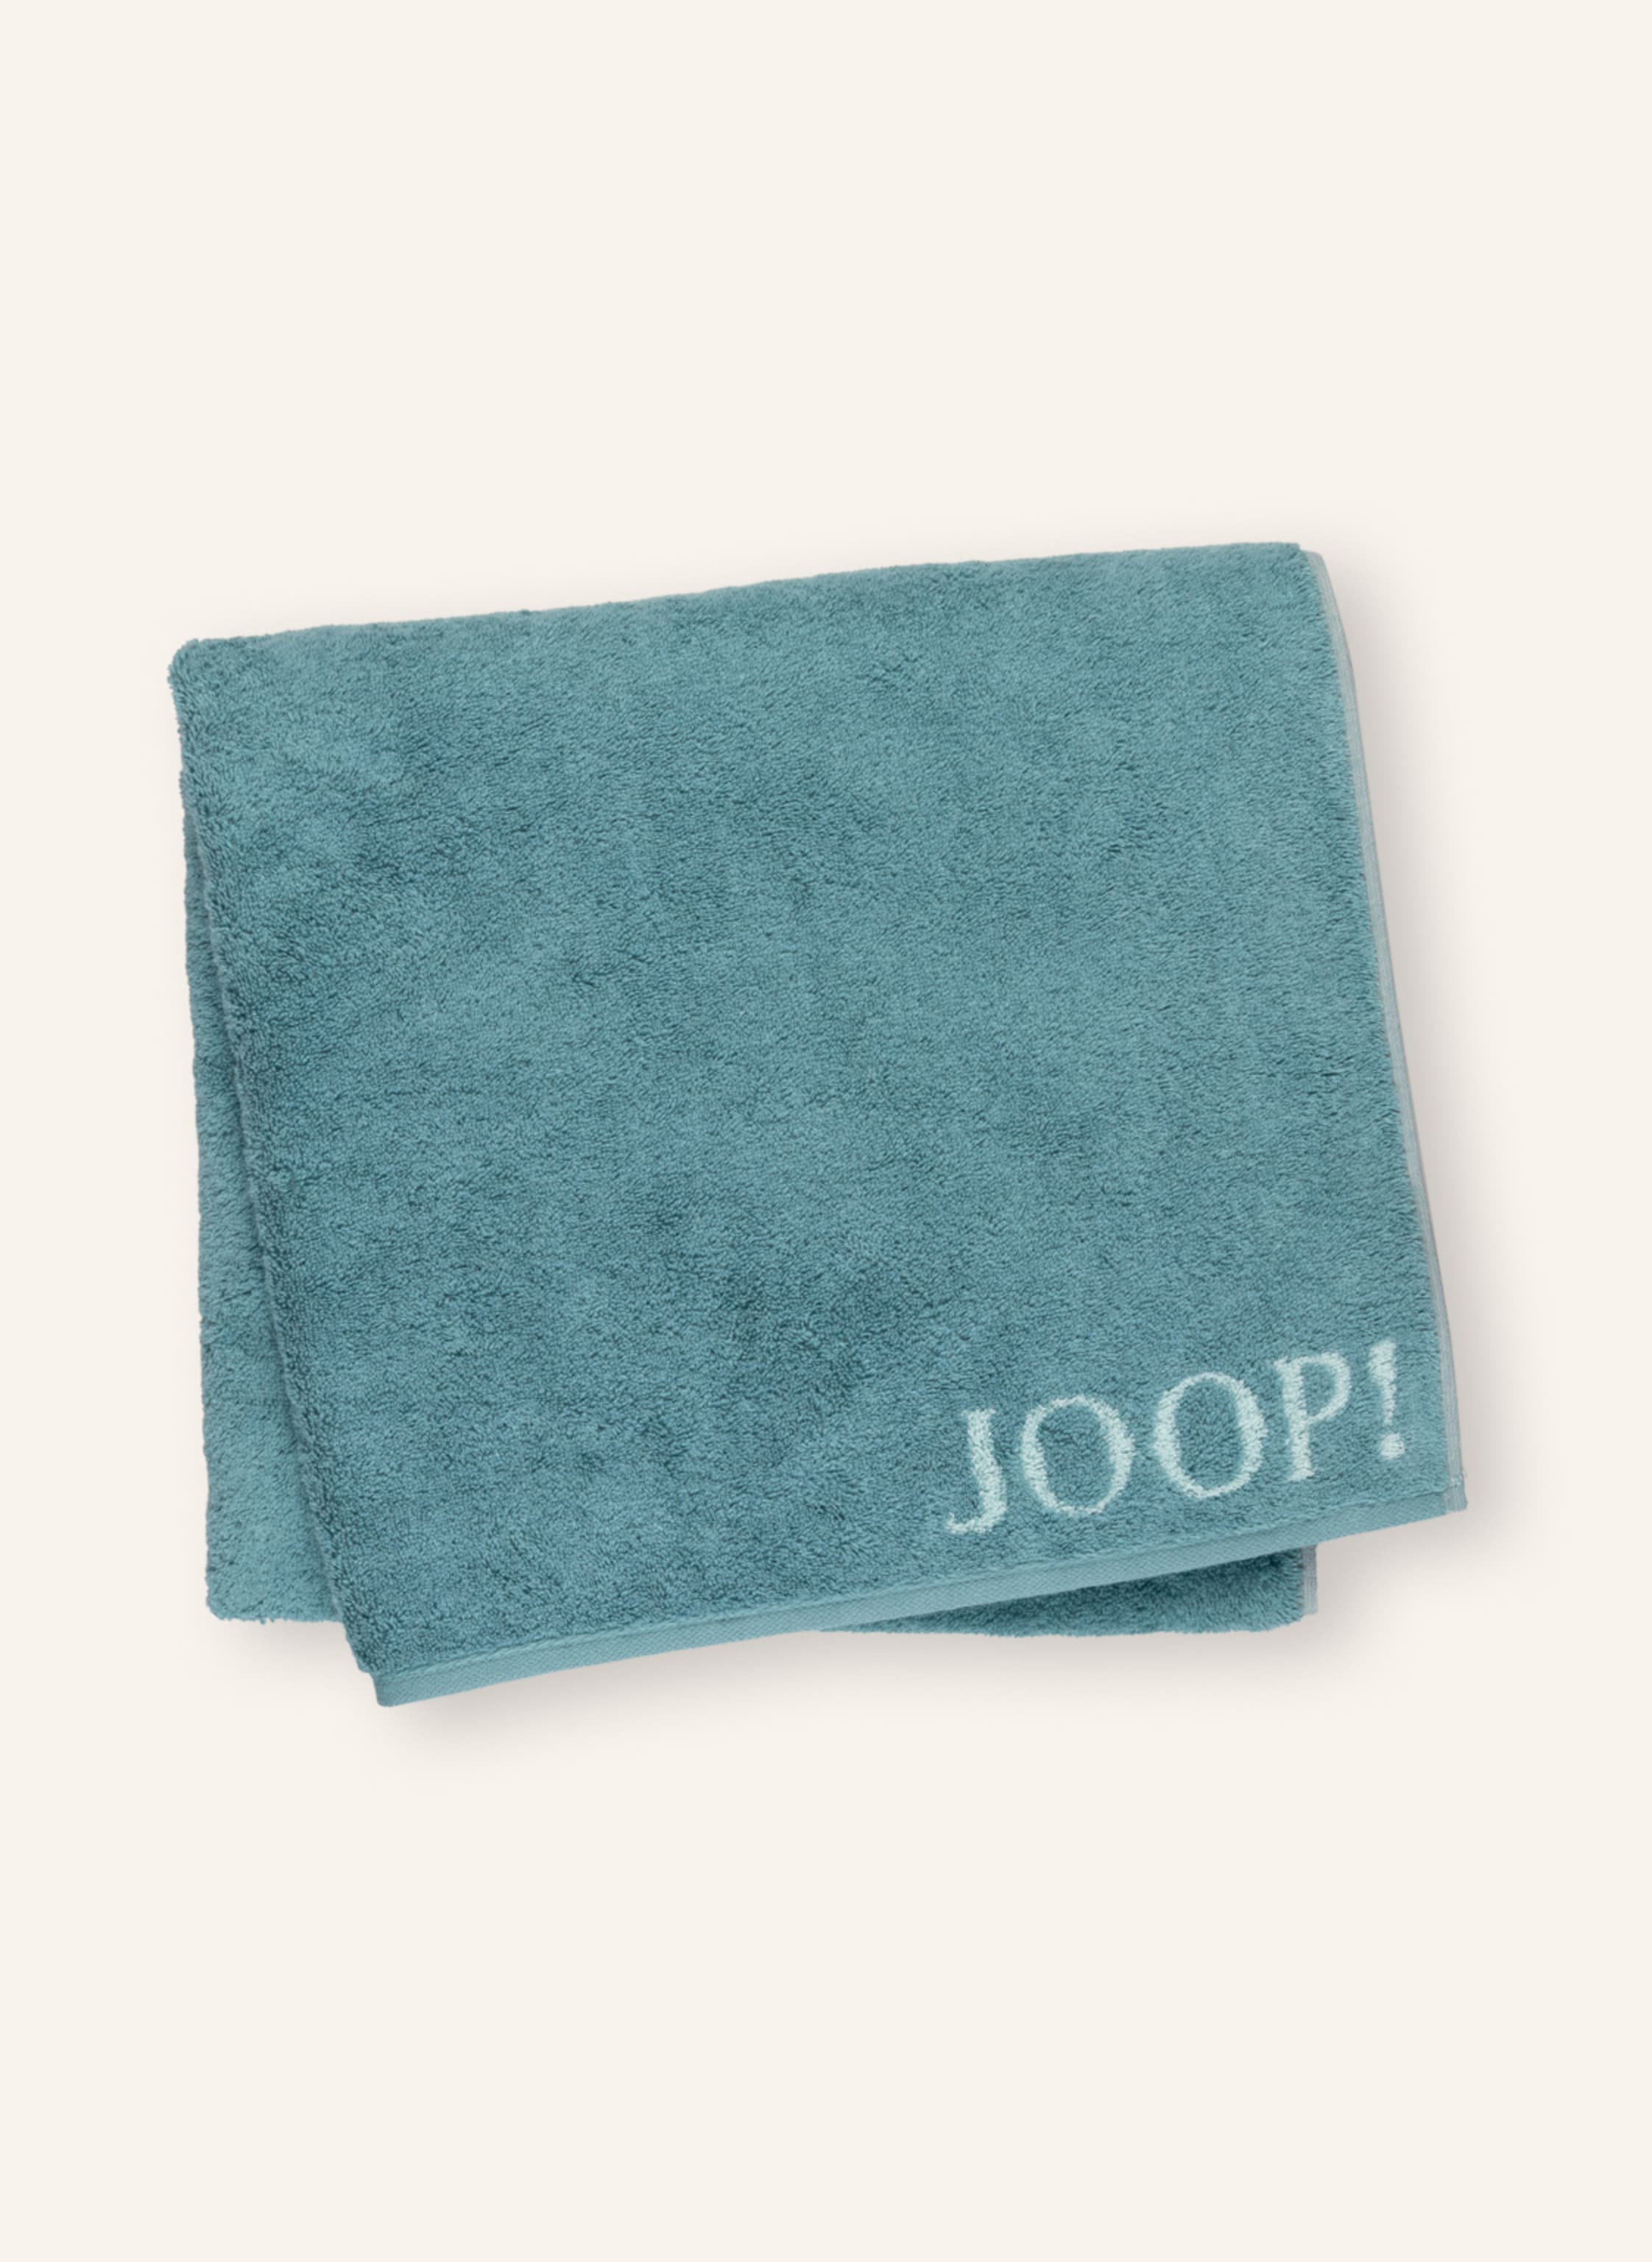 JOOP! Bath towel CLASSIC DOUBLEFACE in teal/ mint